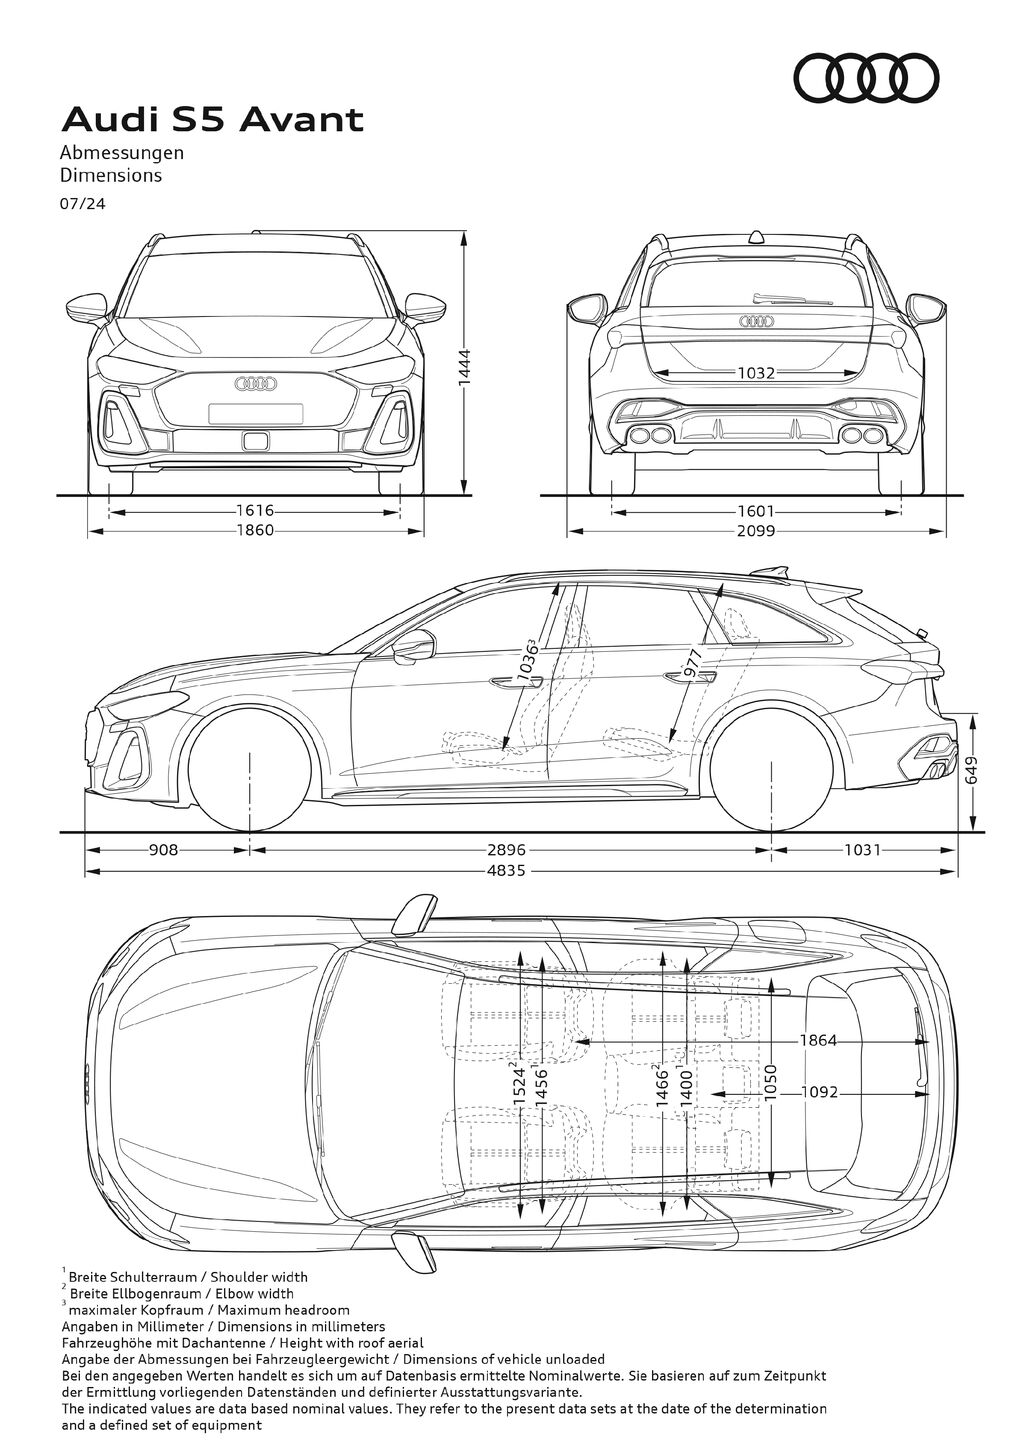 Dimensions Audi S5 Avant